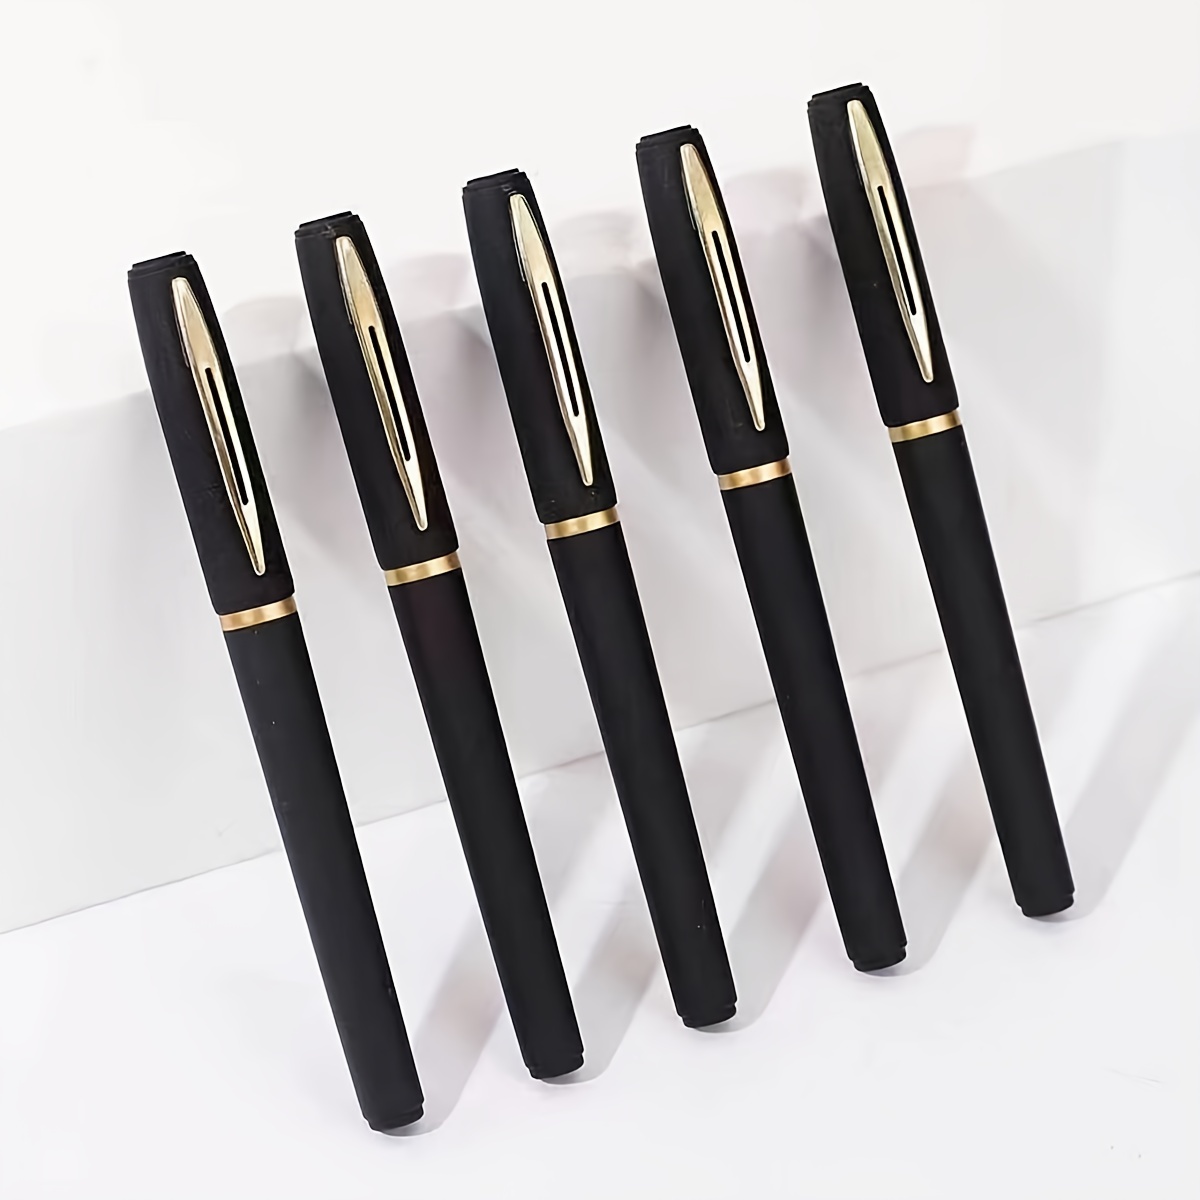 Black Gel Pen 0.5mm Full Matte Water Pens Writing Stationery Supply O Good